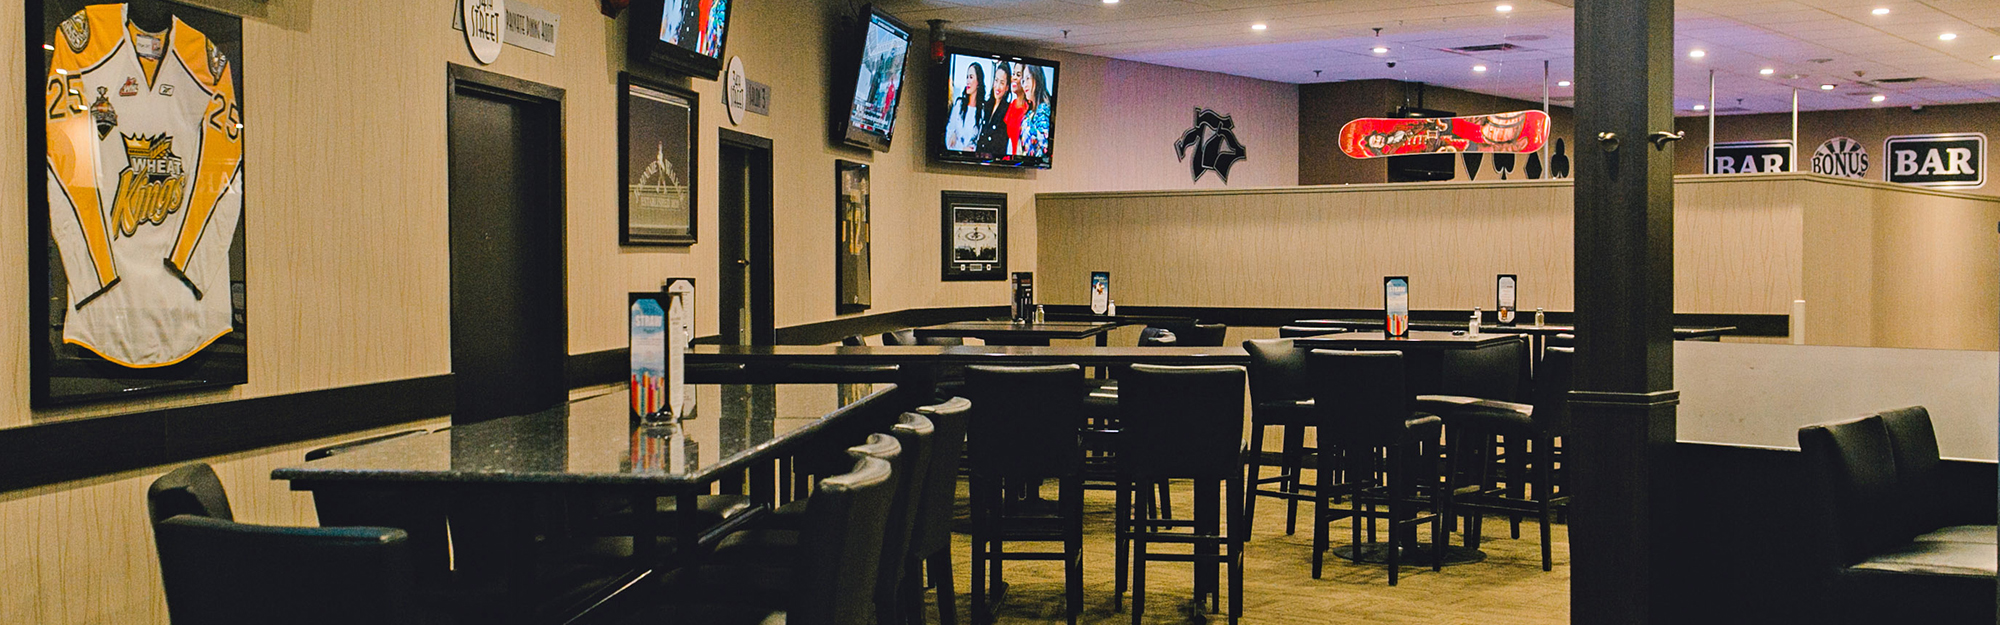 Main dining area and bar of Chicago Joe's Restaurant & Sports Bar